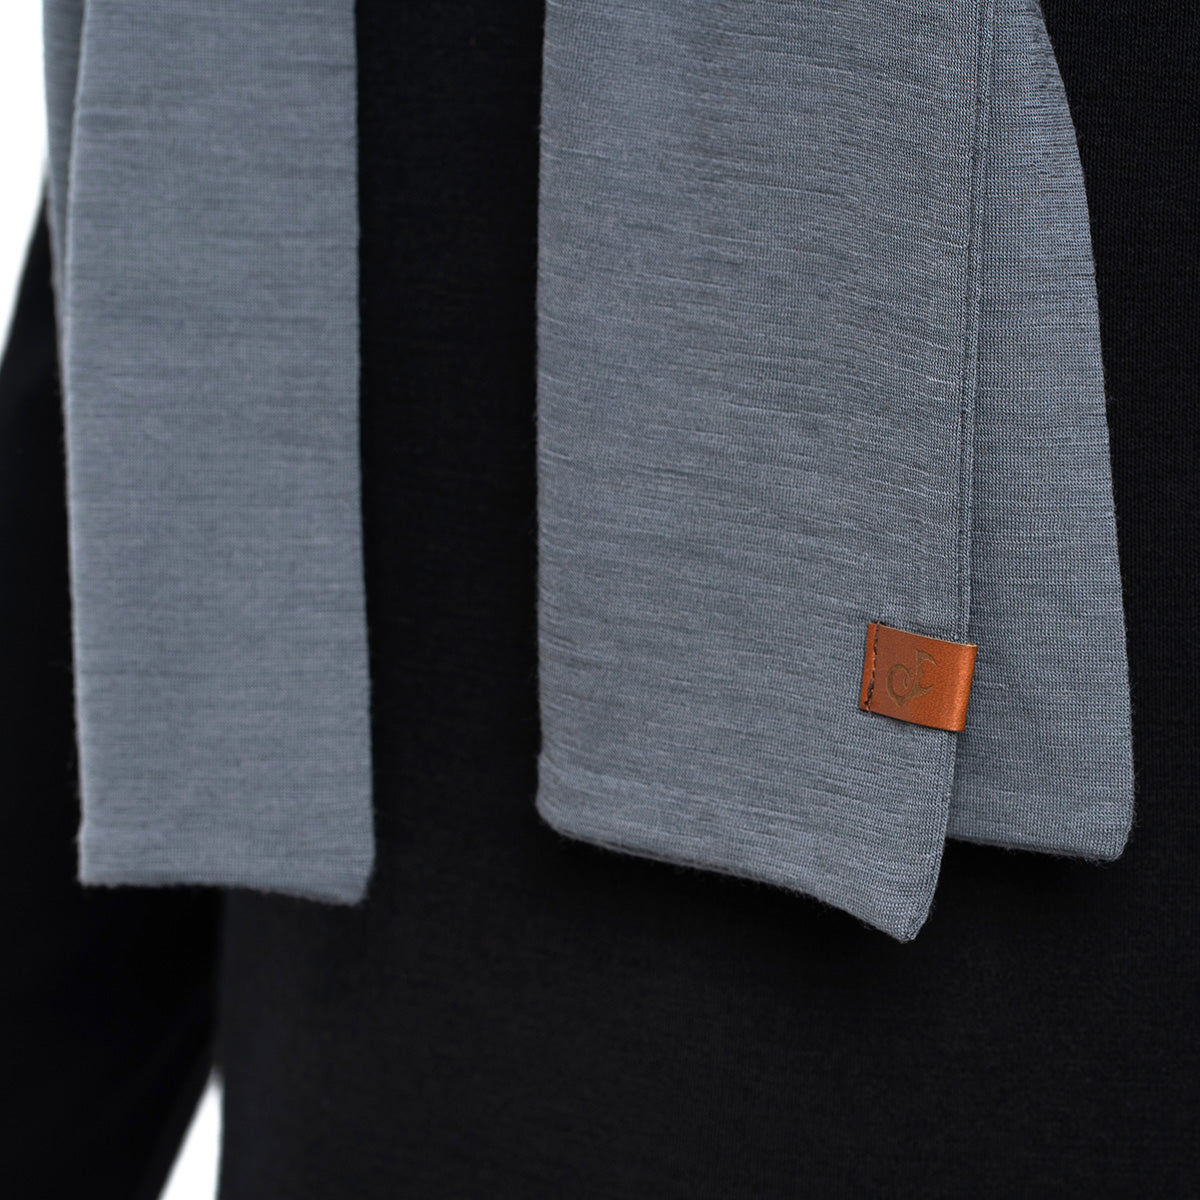 MENIQUE 100% Merino Wool Womens Scarf Perfect Grey